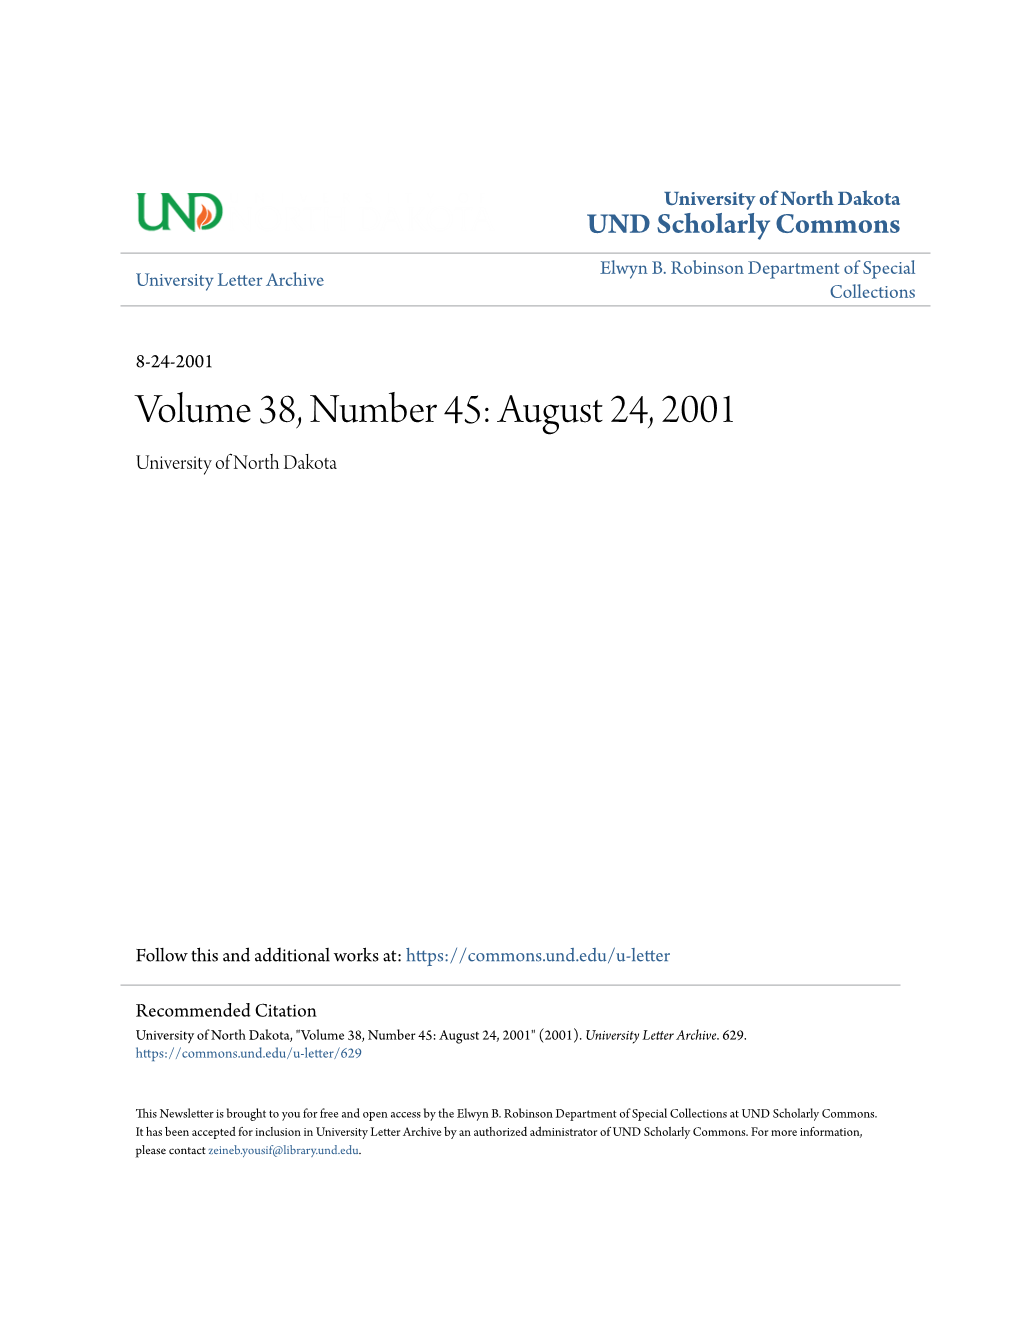 Volume 38, Number 45: August 24, 2001 University of North Dakota